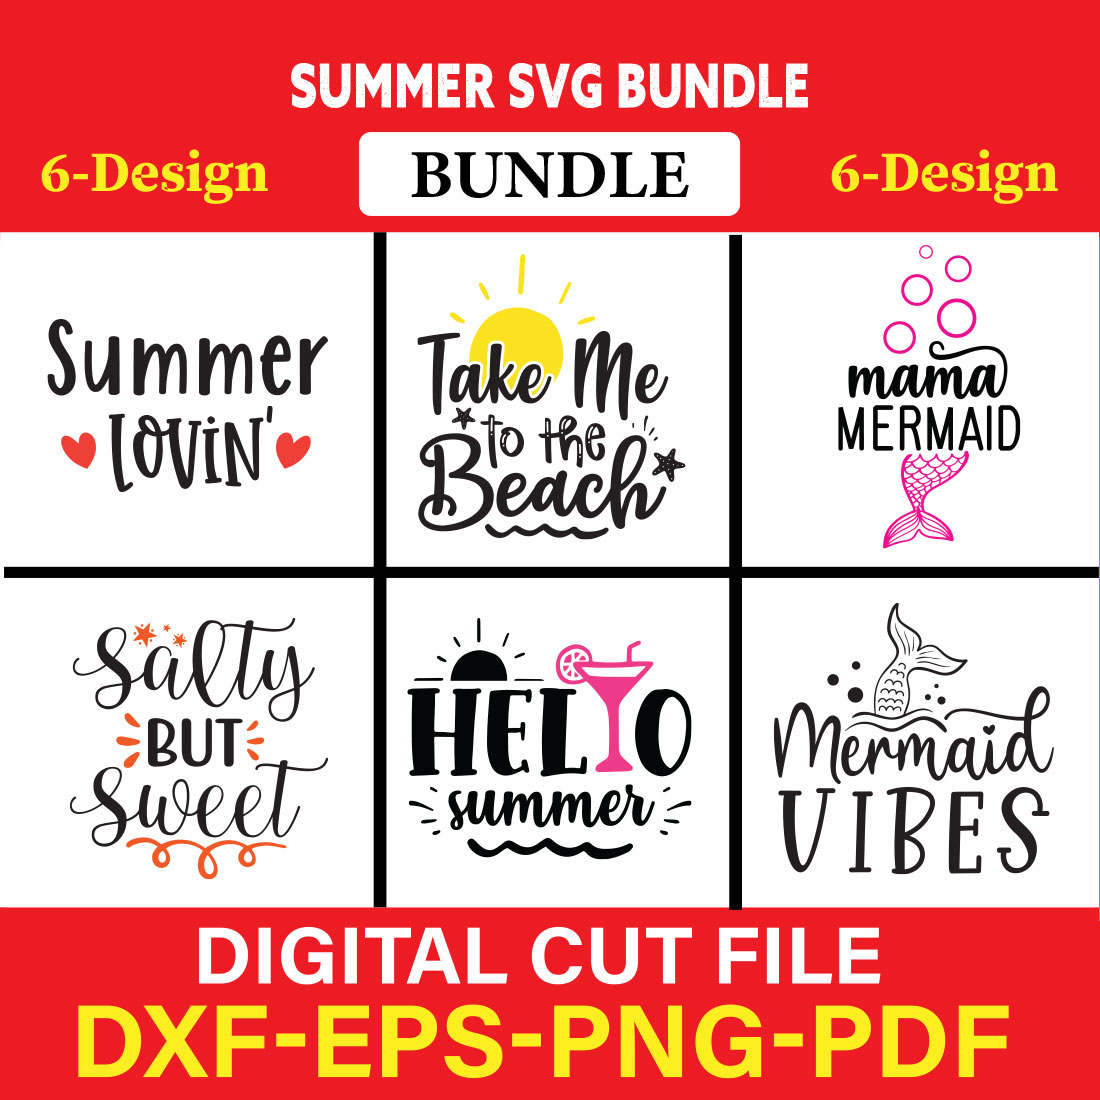 Summer T-shirt Design Bundle Vol-2 cover image.